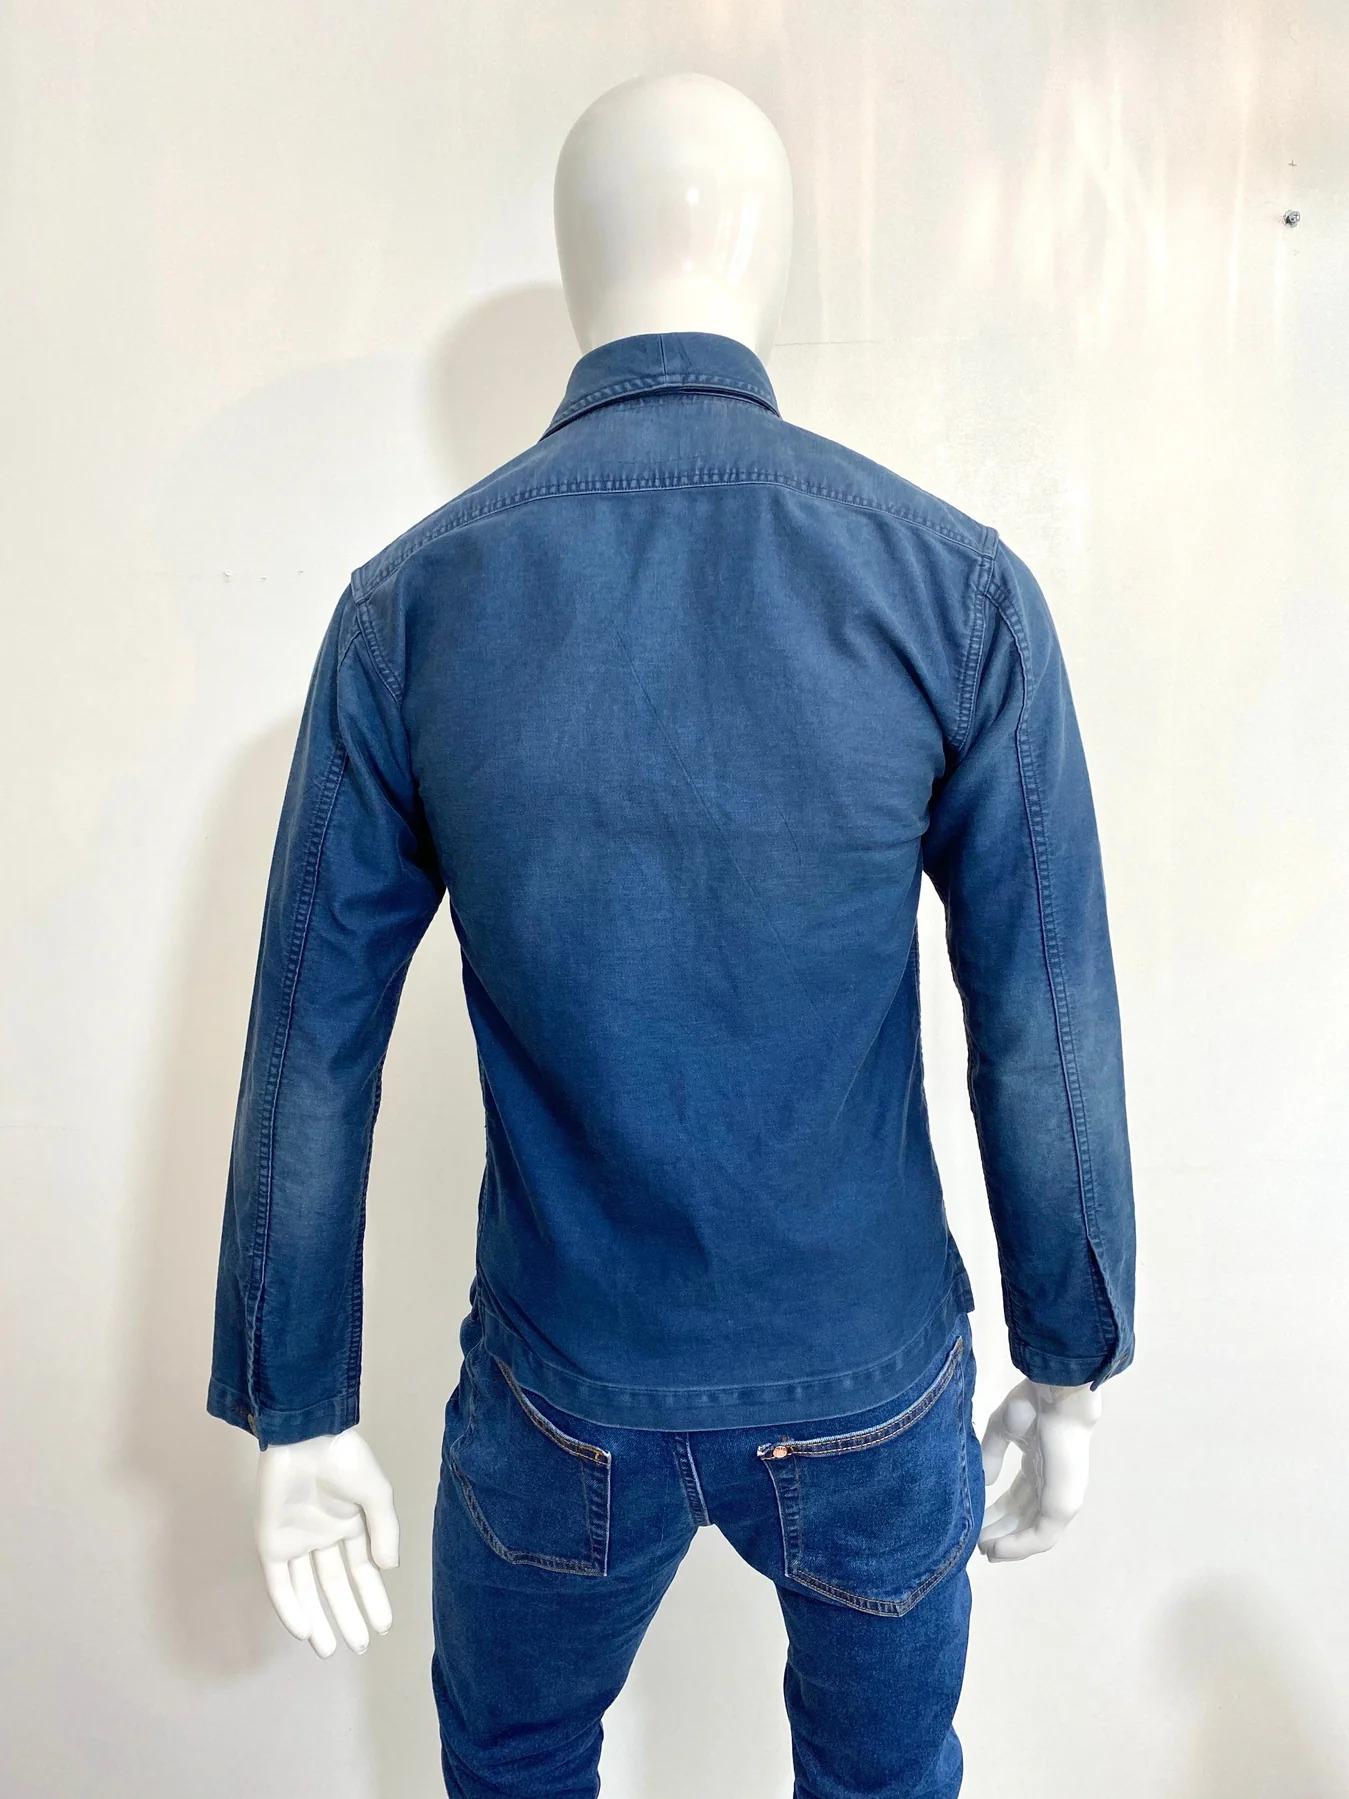 Ralph Lauren Denim Jacket In Excellent Condition For Sale In London, GB